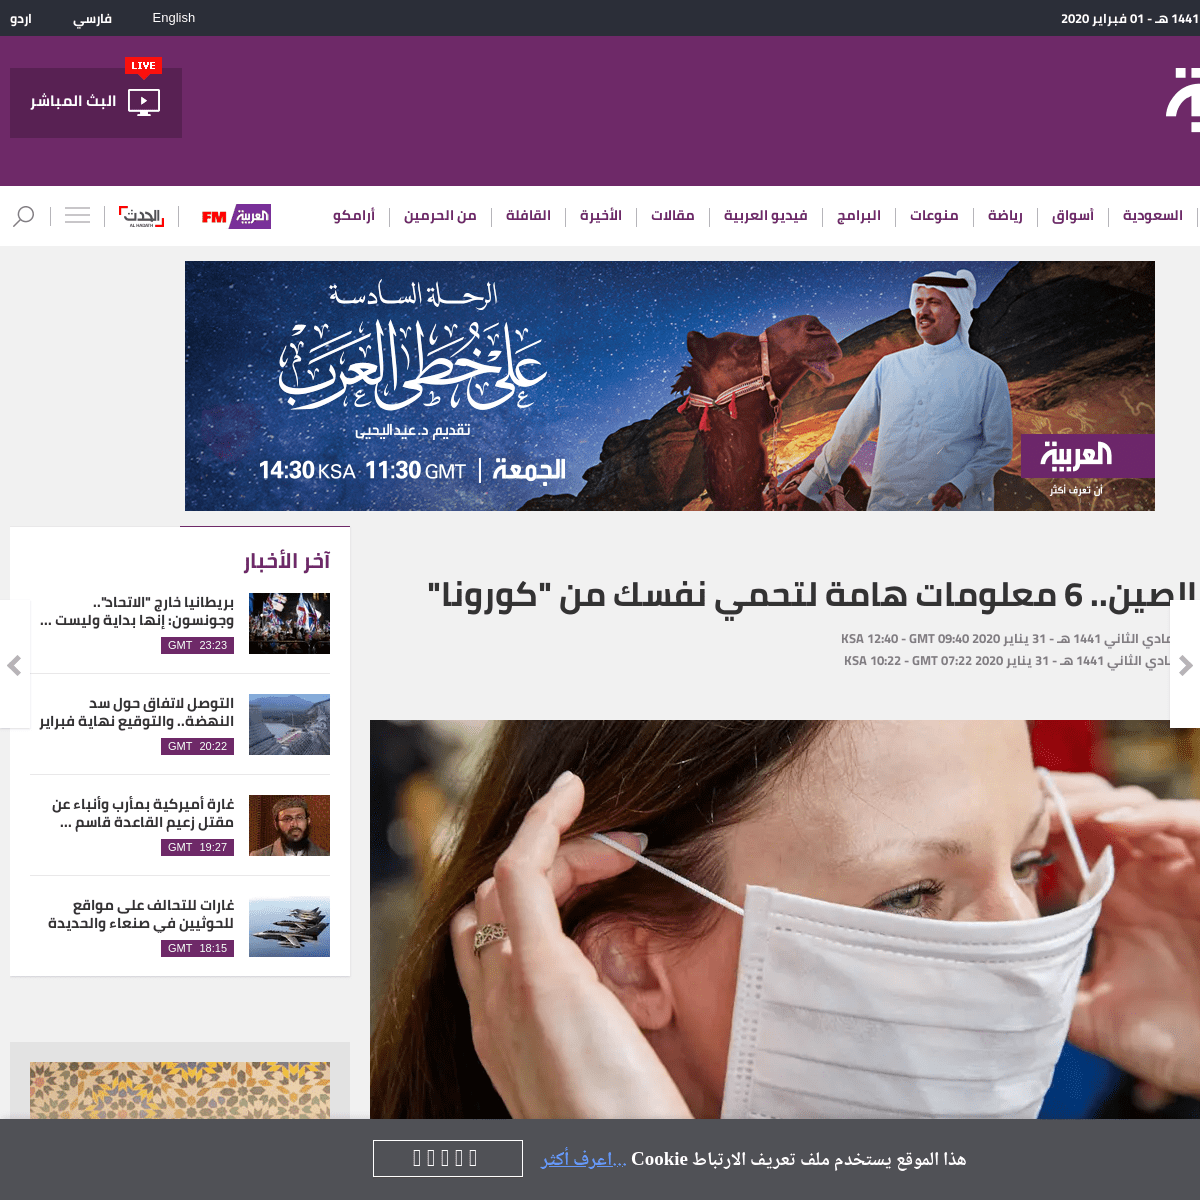 A complete backup of www.alarabiya.net/ar/medicine-and-health/2020/01/31/%D9%85%D9%86-%D8%AF%D8%A7%D8%AE%D9%84-%D8%A7%D9%84%D8%B